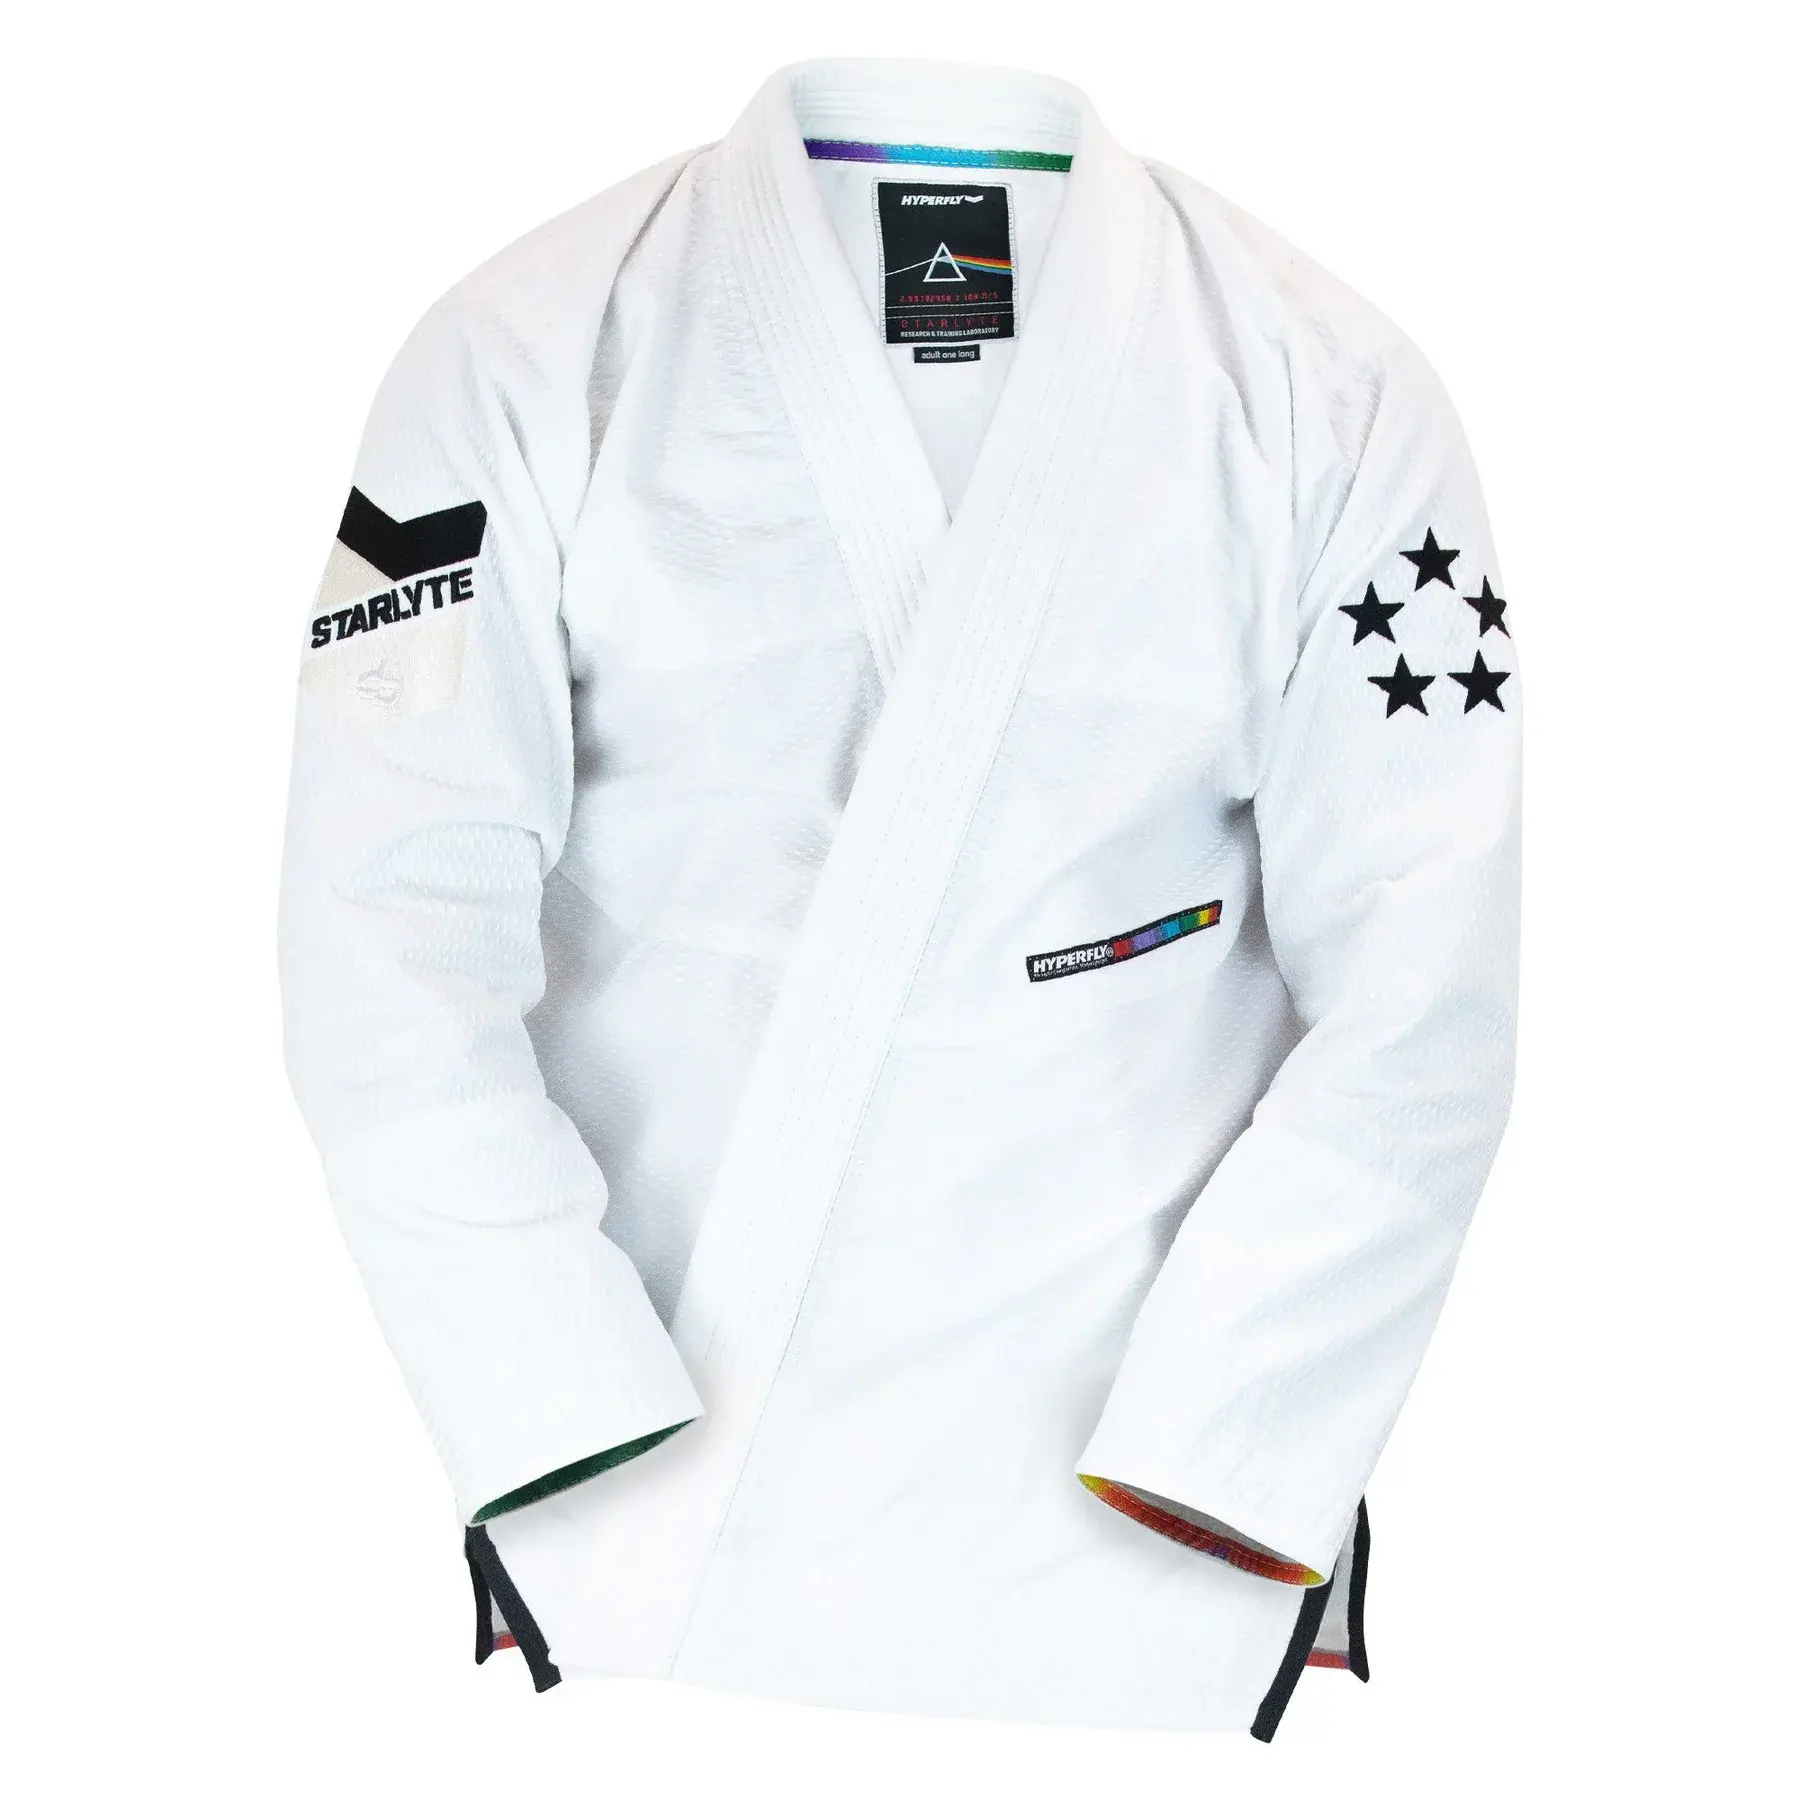 Best Quality Jiu Jitsu Gi Uniforms BJJ Kimono Martial Arts Suits Customized Adult Youth Bjj Uniform for Men Women & Kids Mma